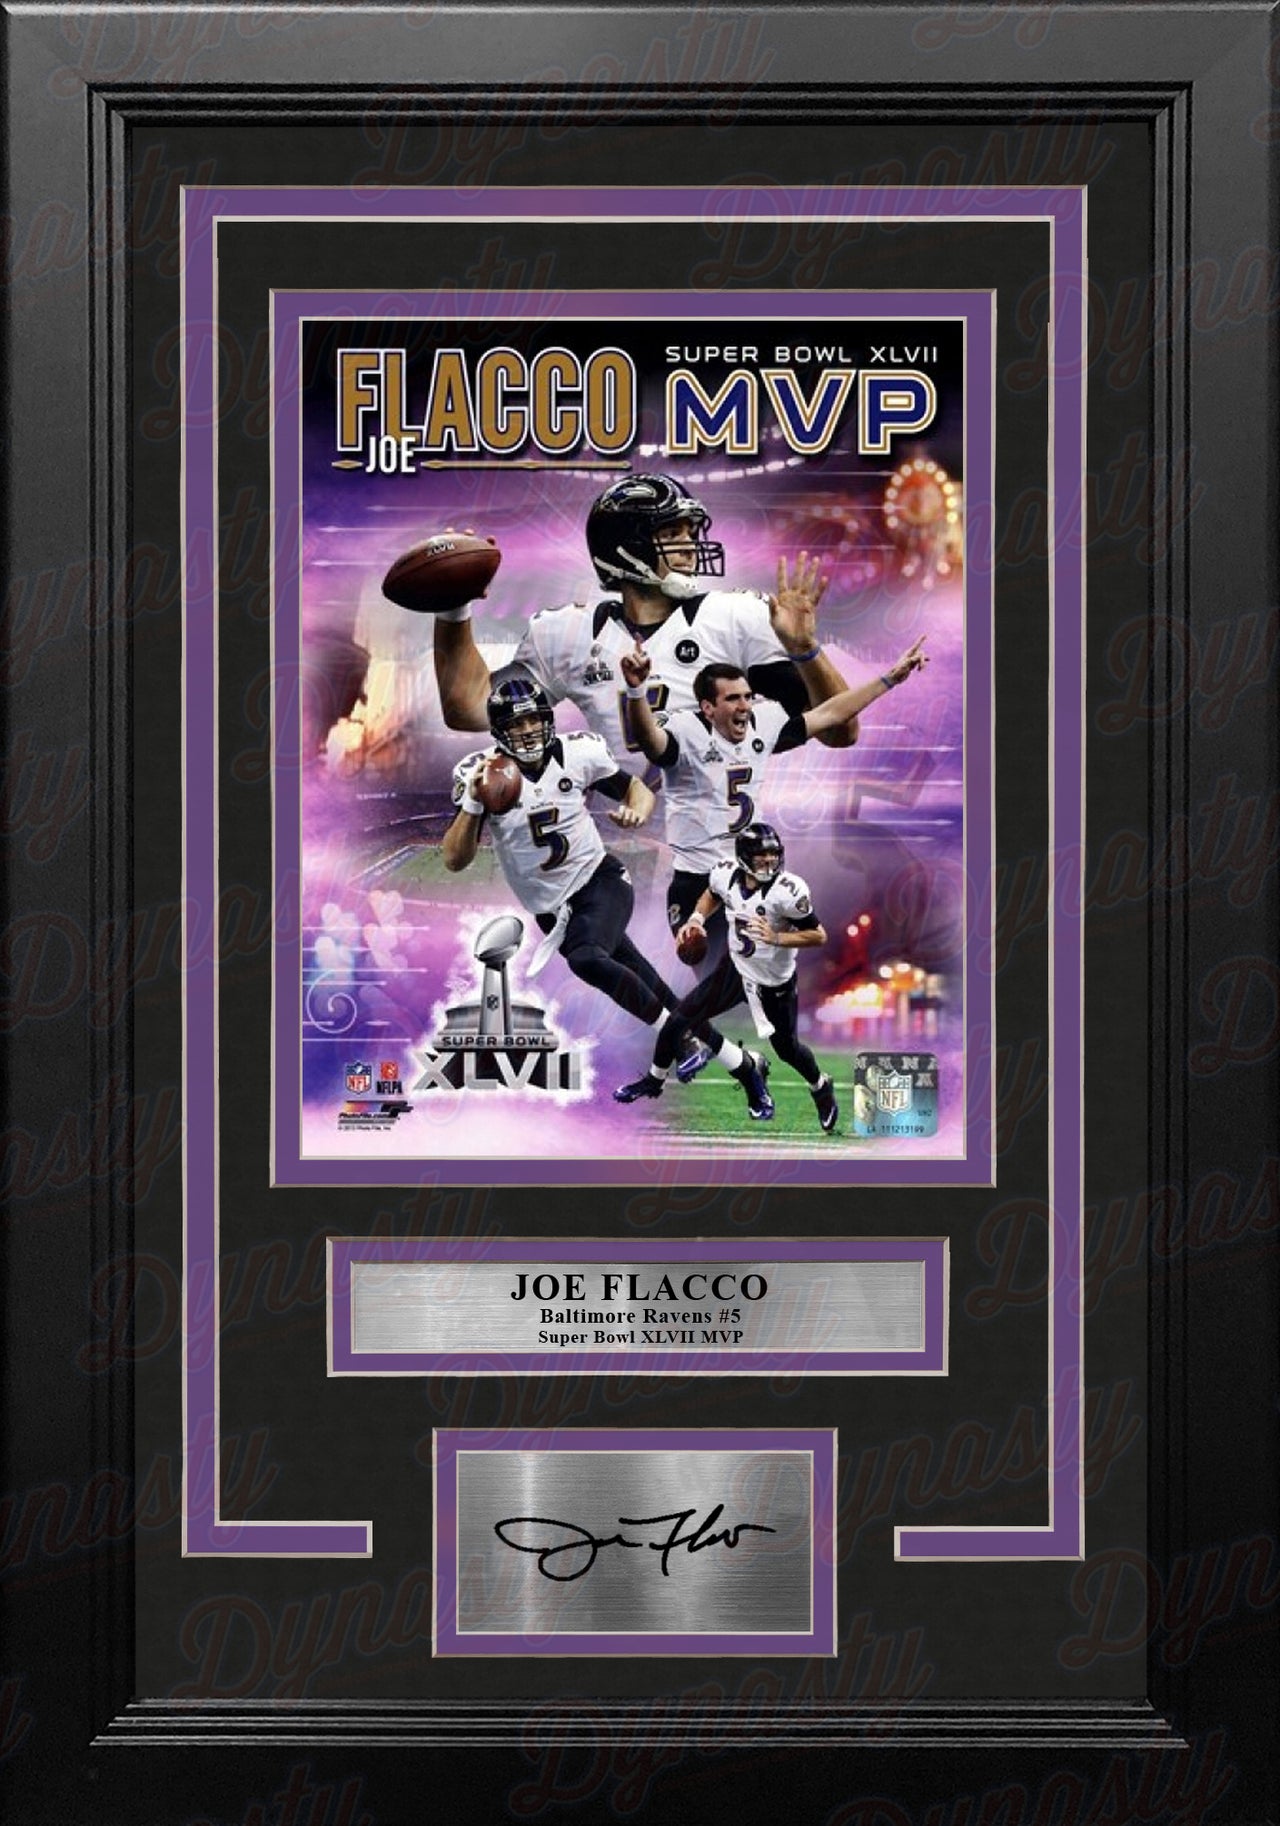 Joe Flacco Super Bowl XLVII MVP Baltimore Ravens 8x10 Framed Football Photo with Engraved Autograph - Dynasty Sports & Framing 